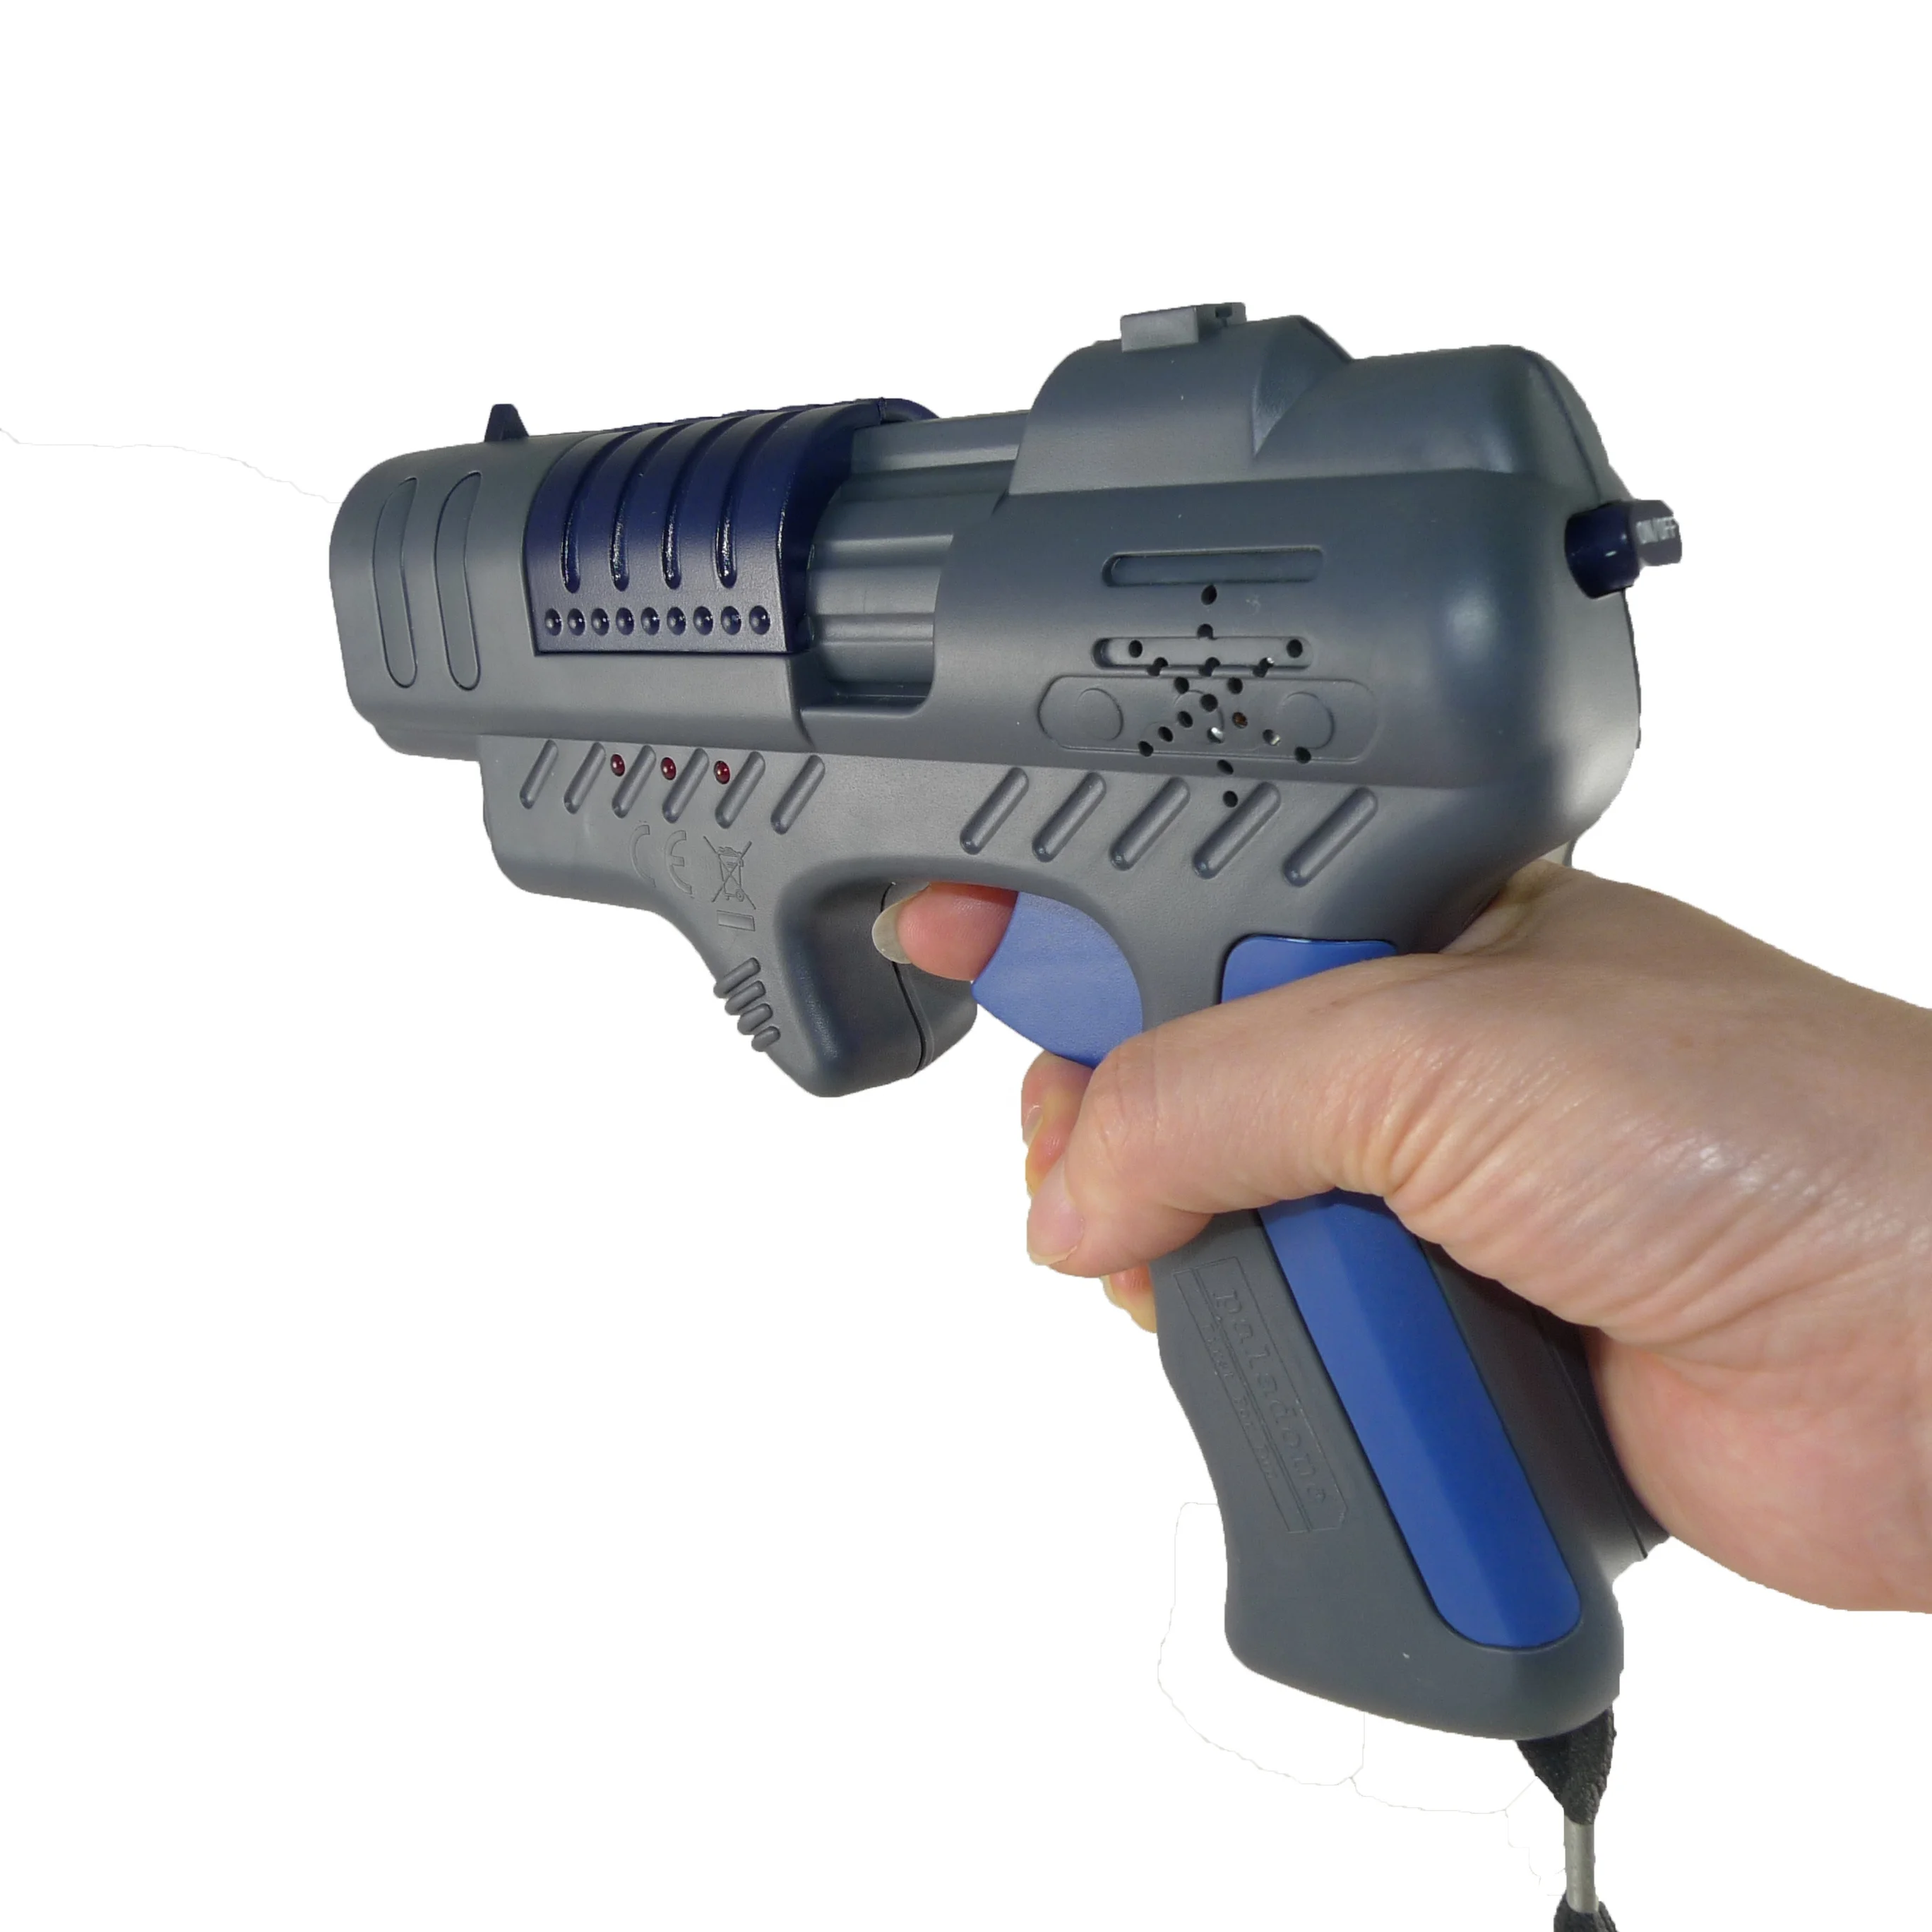 2020 Novelty & Gag Toys Family Infrared Laser Tag Set,Laser Tag Game gun Set,